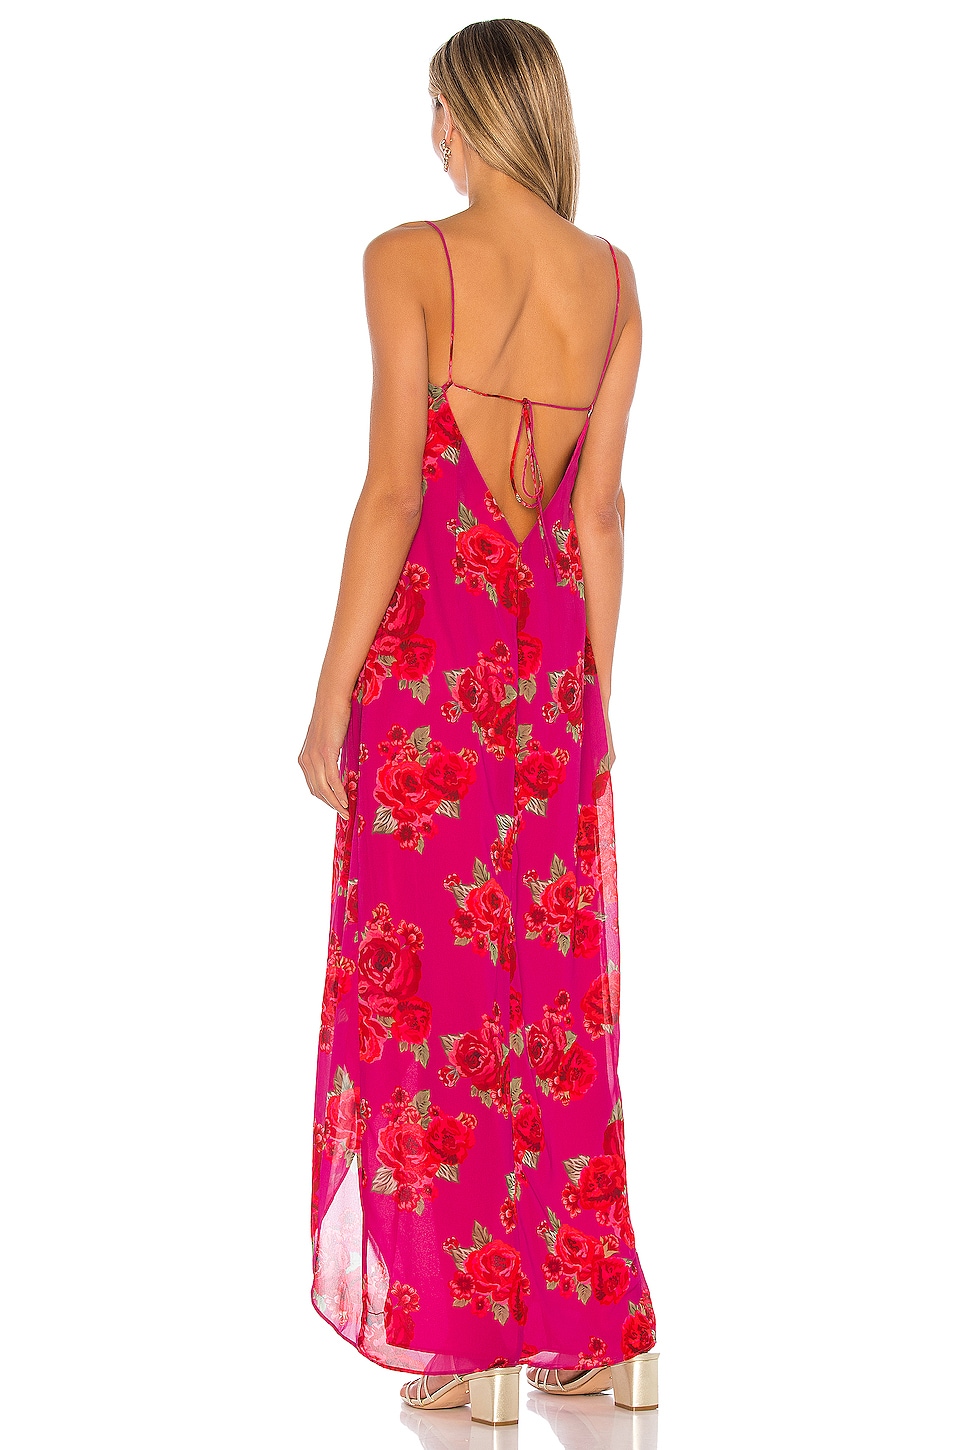 LPA Hilda Dress in Raquel Floral | REVOLVE